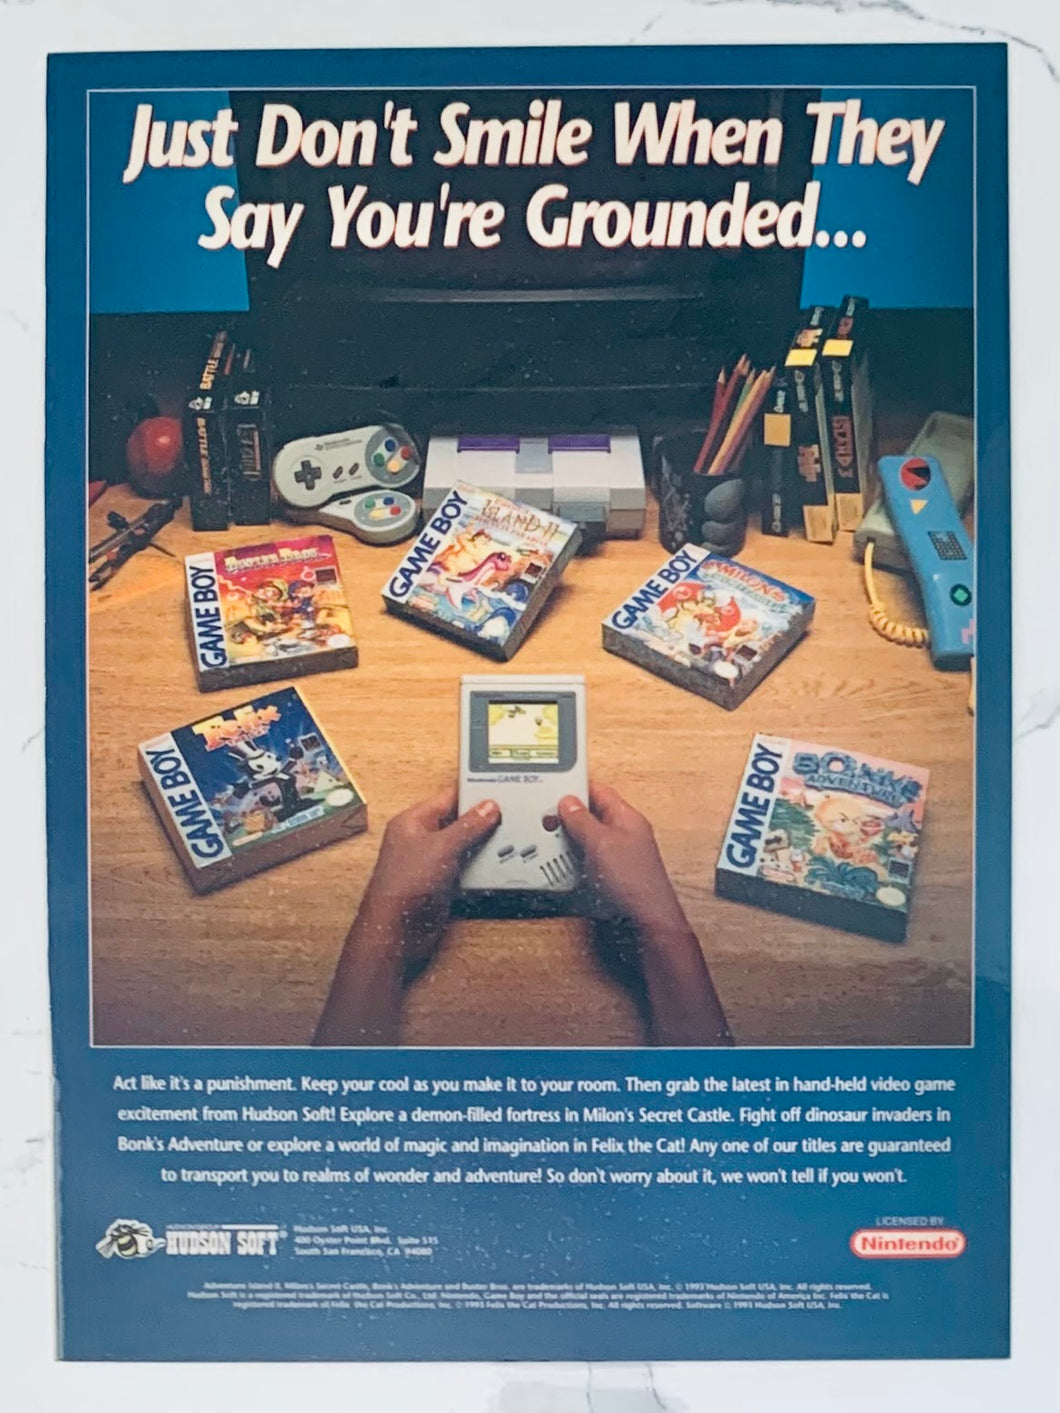 Hudson Soft - GameBoy - Original Vintage Advertisement - Print Ads - Laminated A4 Poster